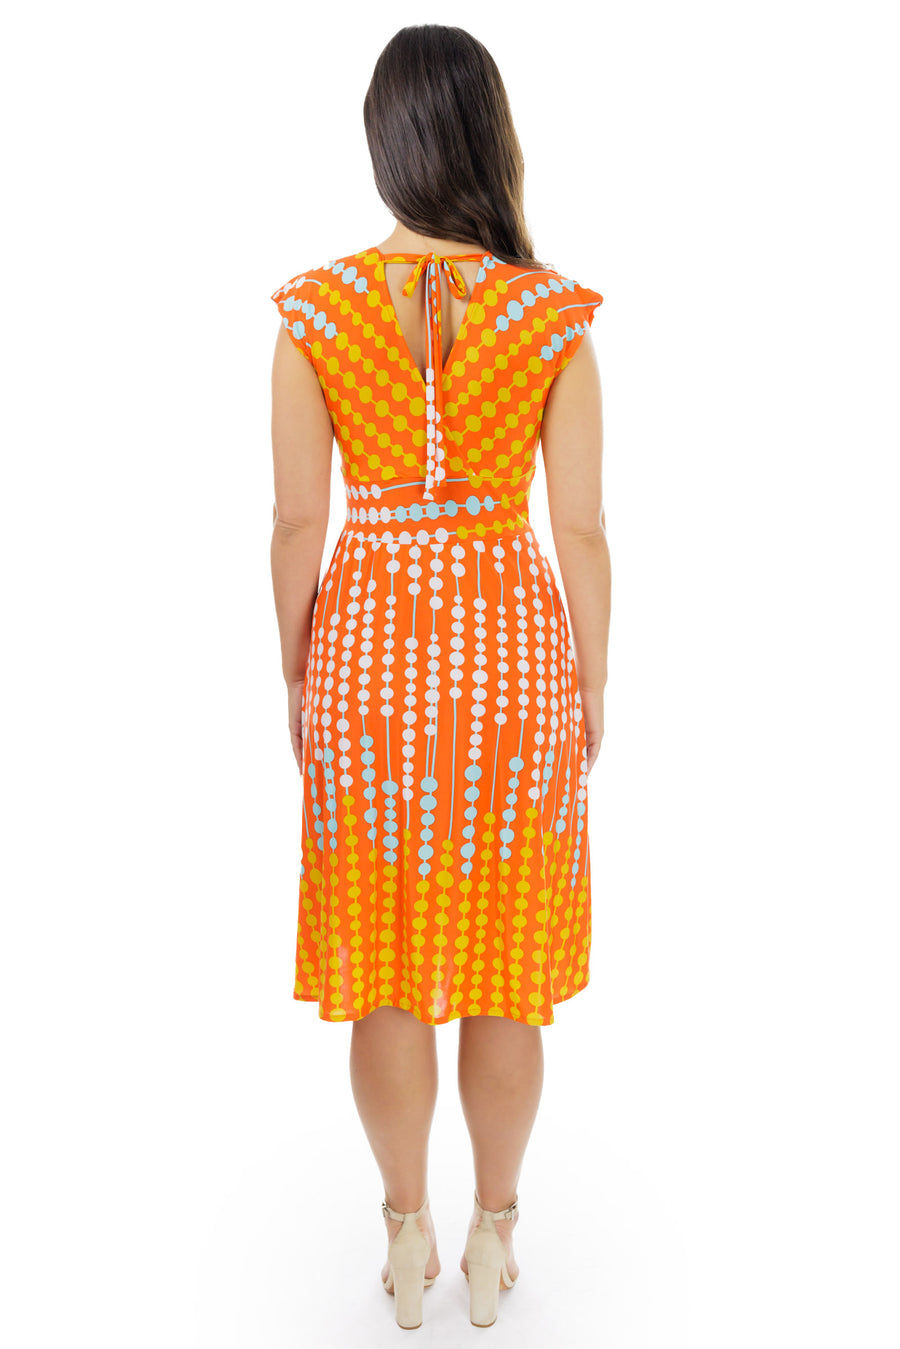 Orange Abacus Veronica Lake Dress